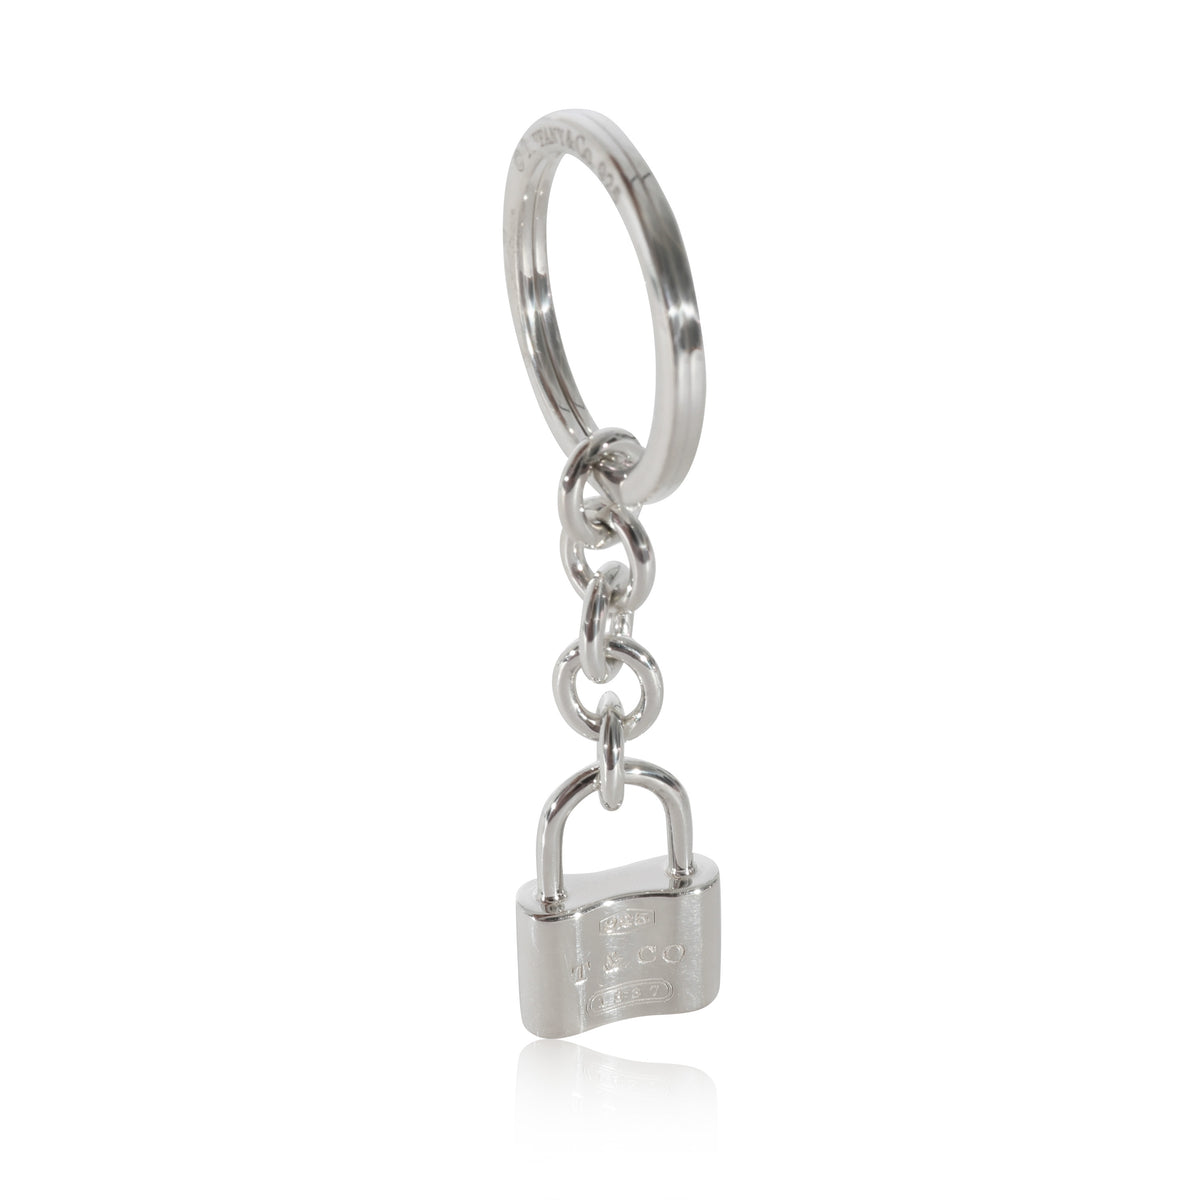 Tiffany & Co. 1837 Padlock Key Ring in Sterling Silver